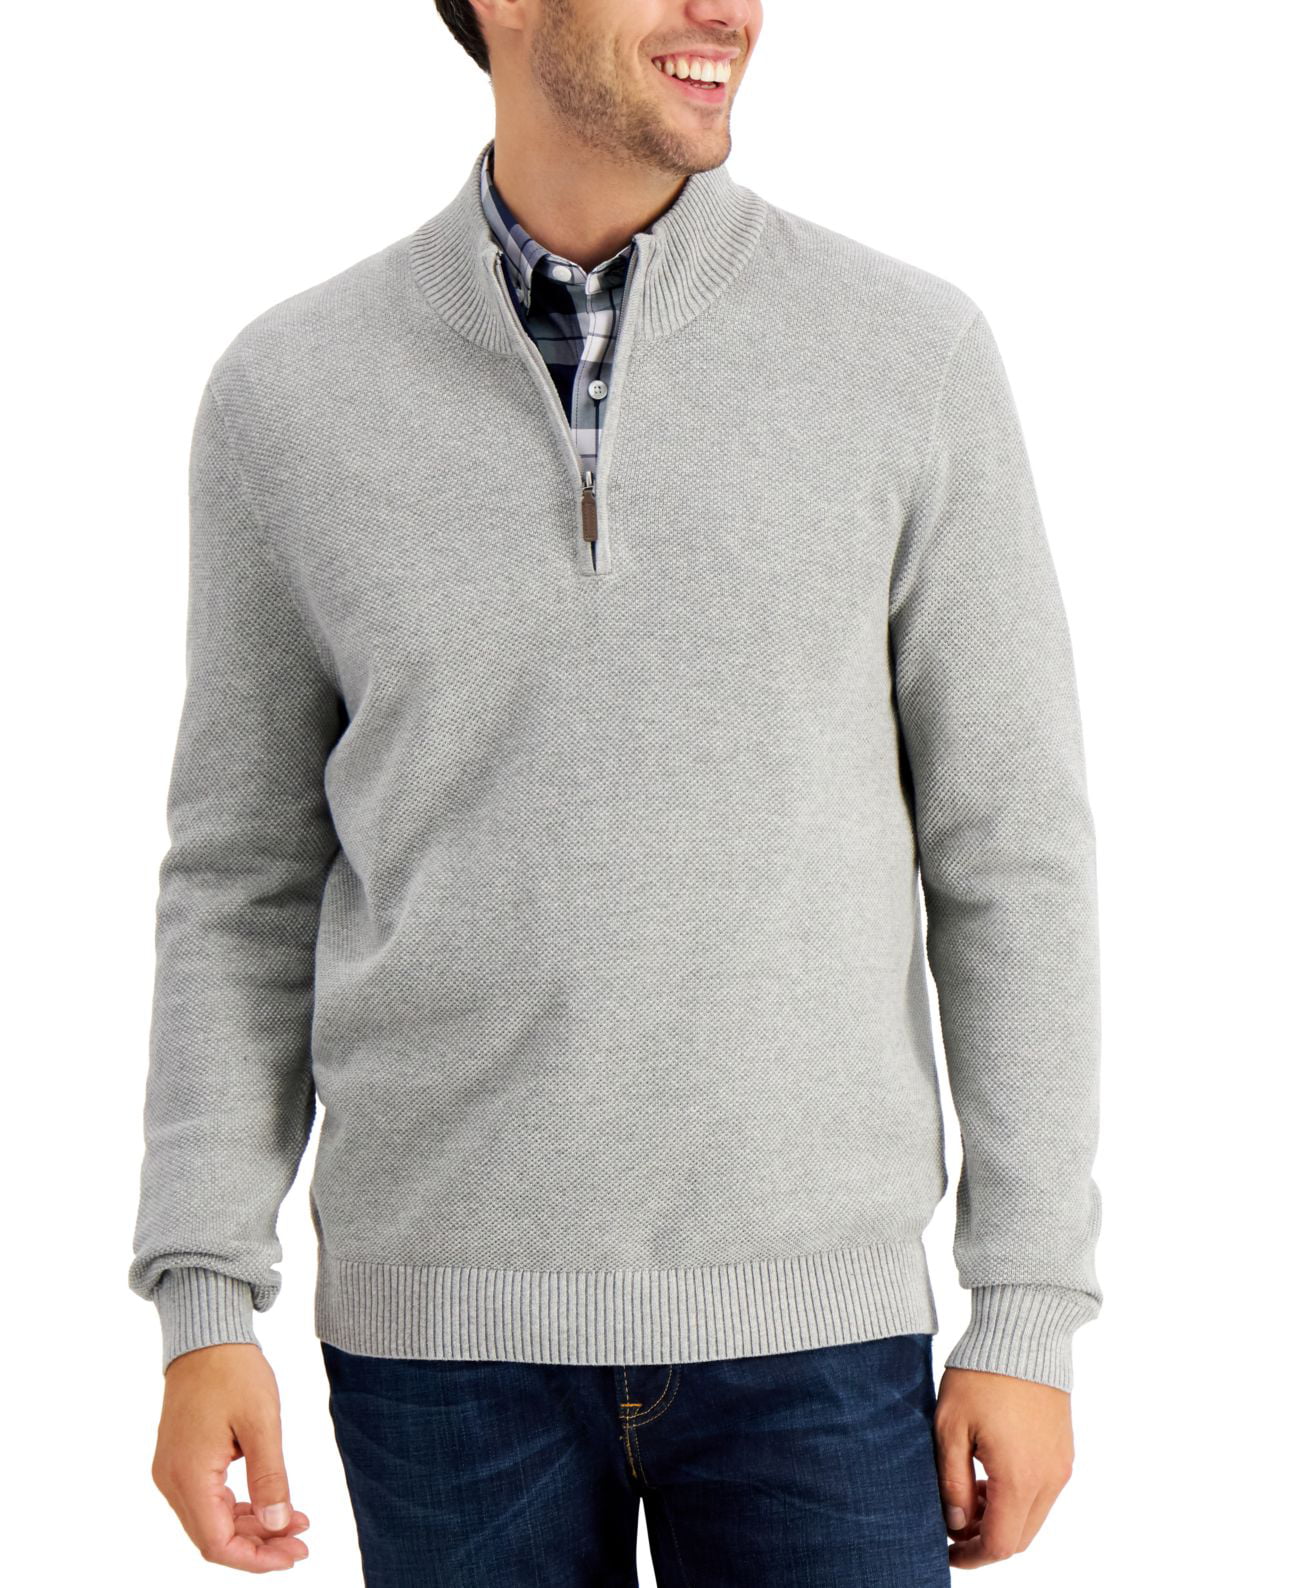 Club Room Men's Quarter-Zip Textured Cotton Sweater, Gray, Small